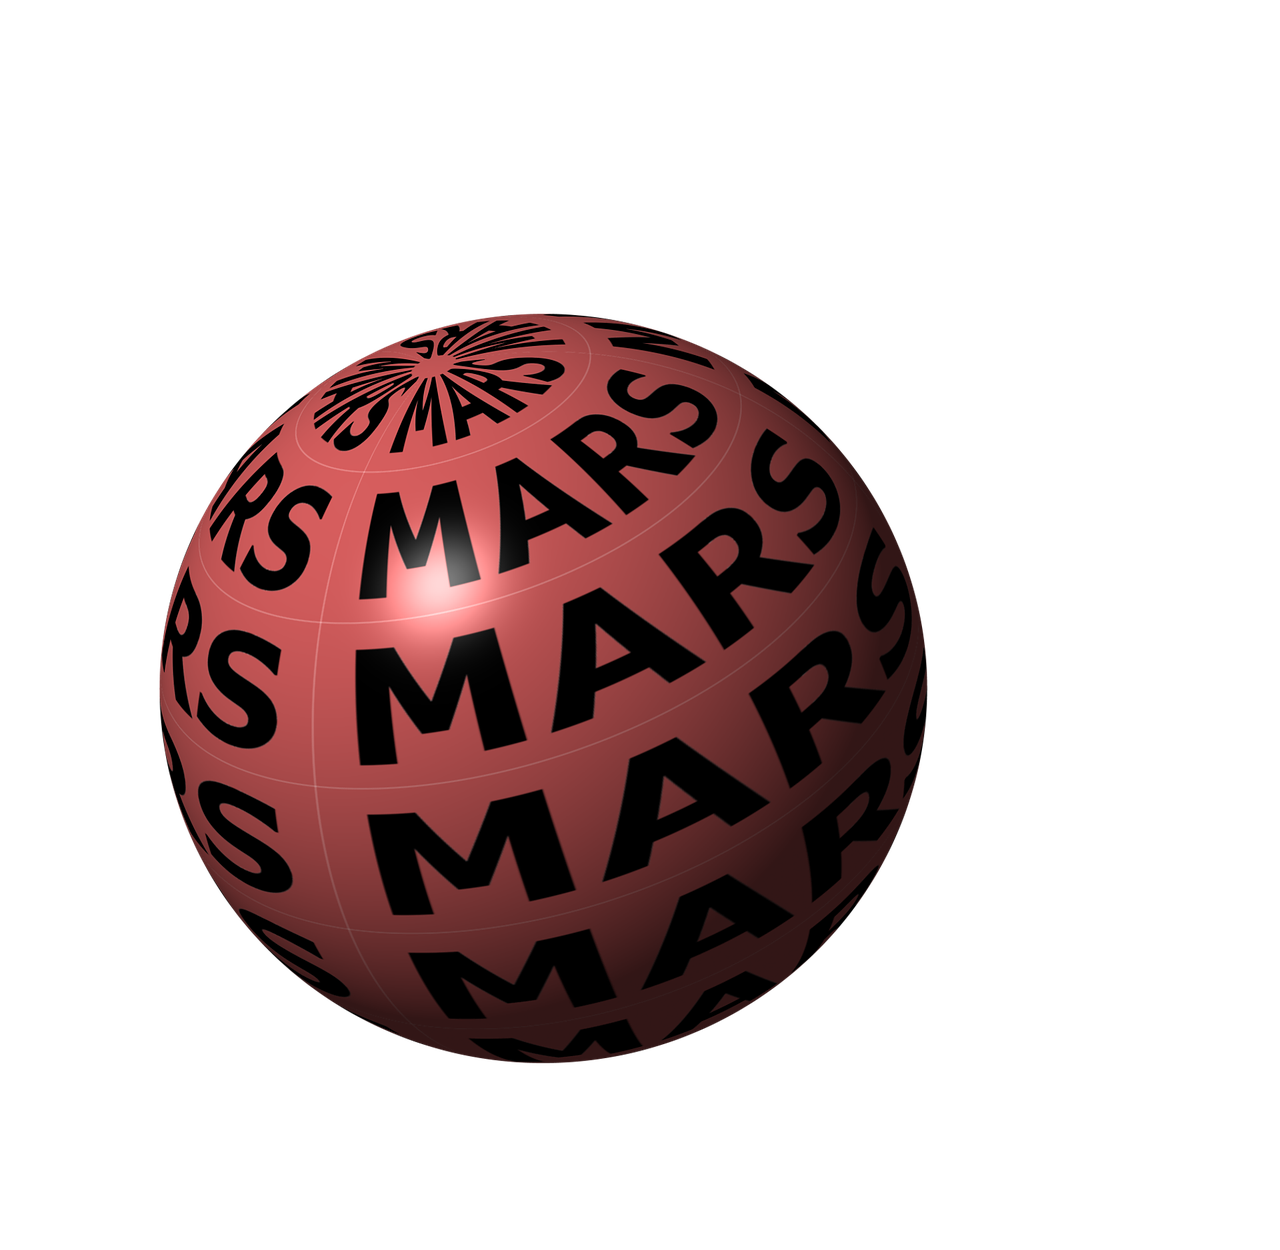 a red and black ball that says mars mars mars mars mars mars mars mars mars mars mars mars mars mars mars mars mars mars mars mars mars, a raytraced image, by Shinji Aramaki, fulldome, 3 4 5 3 1, warp, christmas